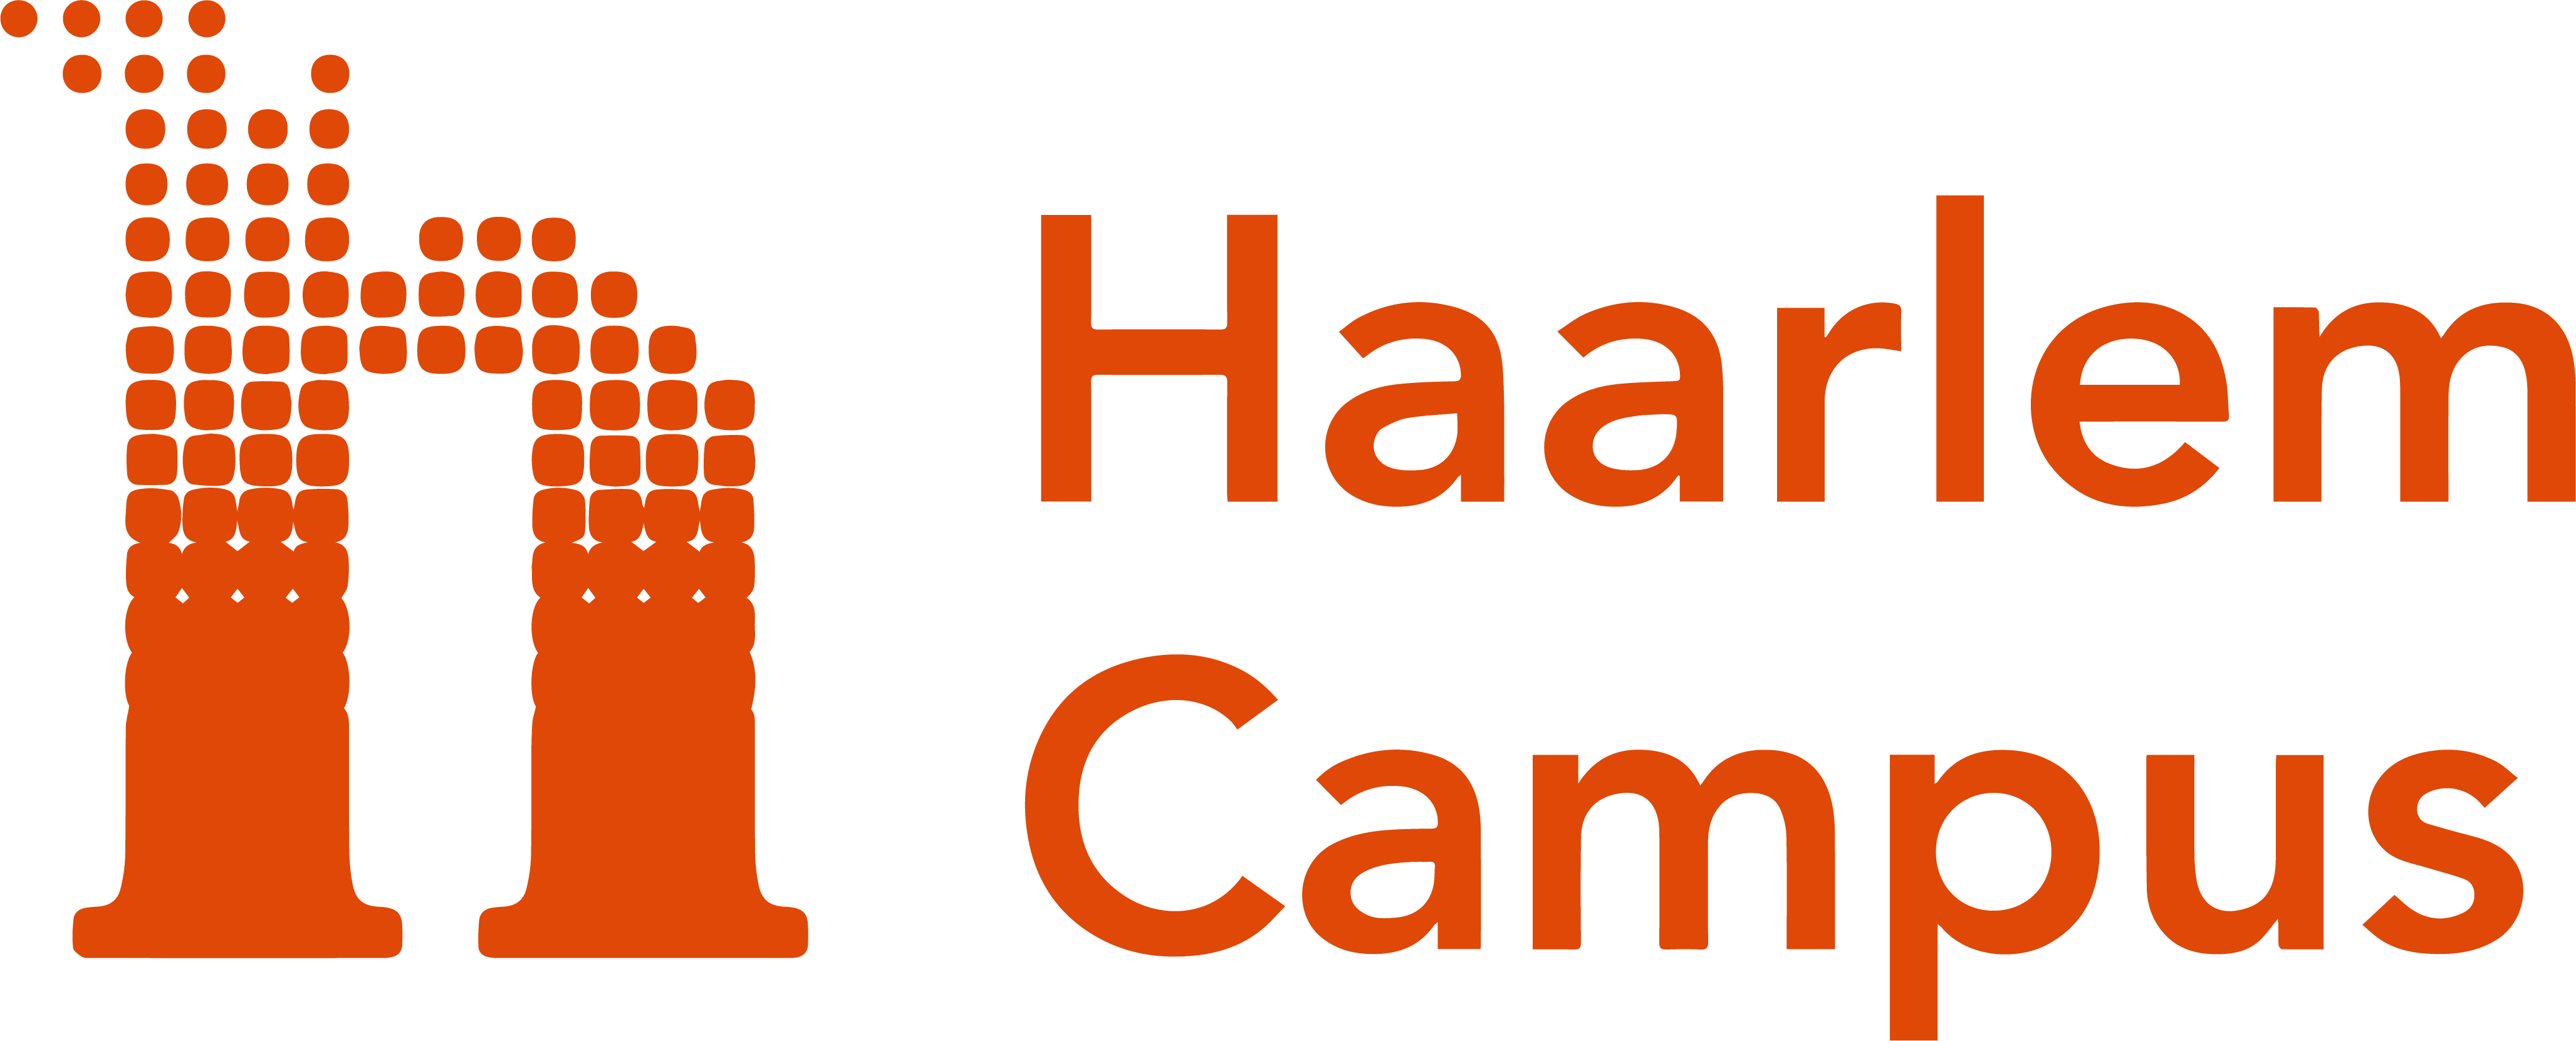 Haarlem Campus